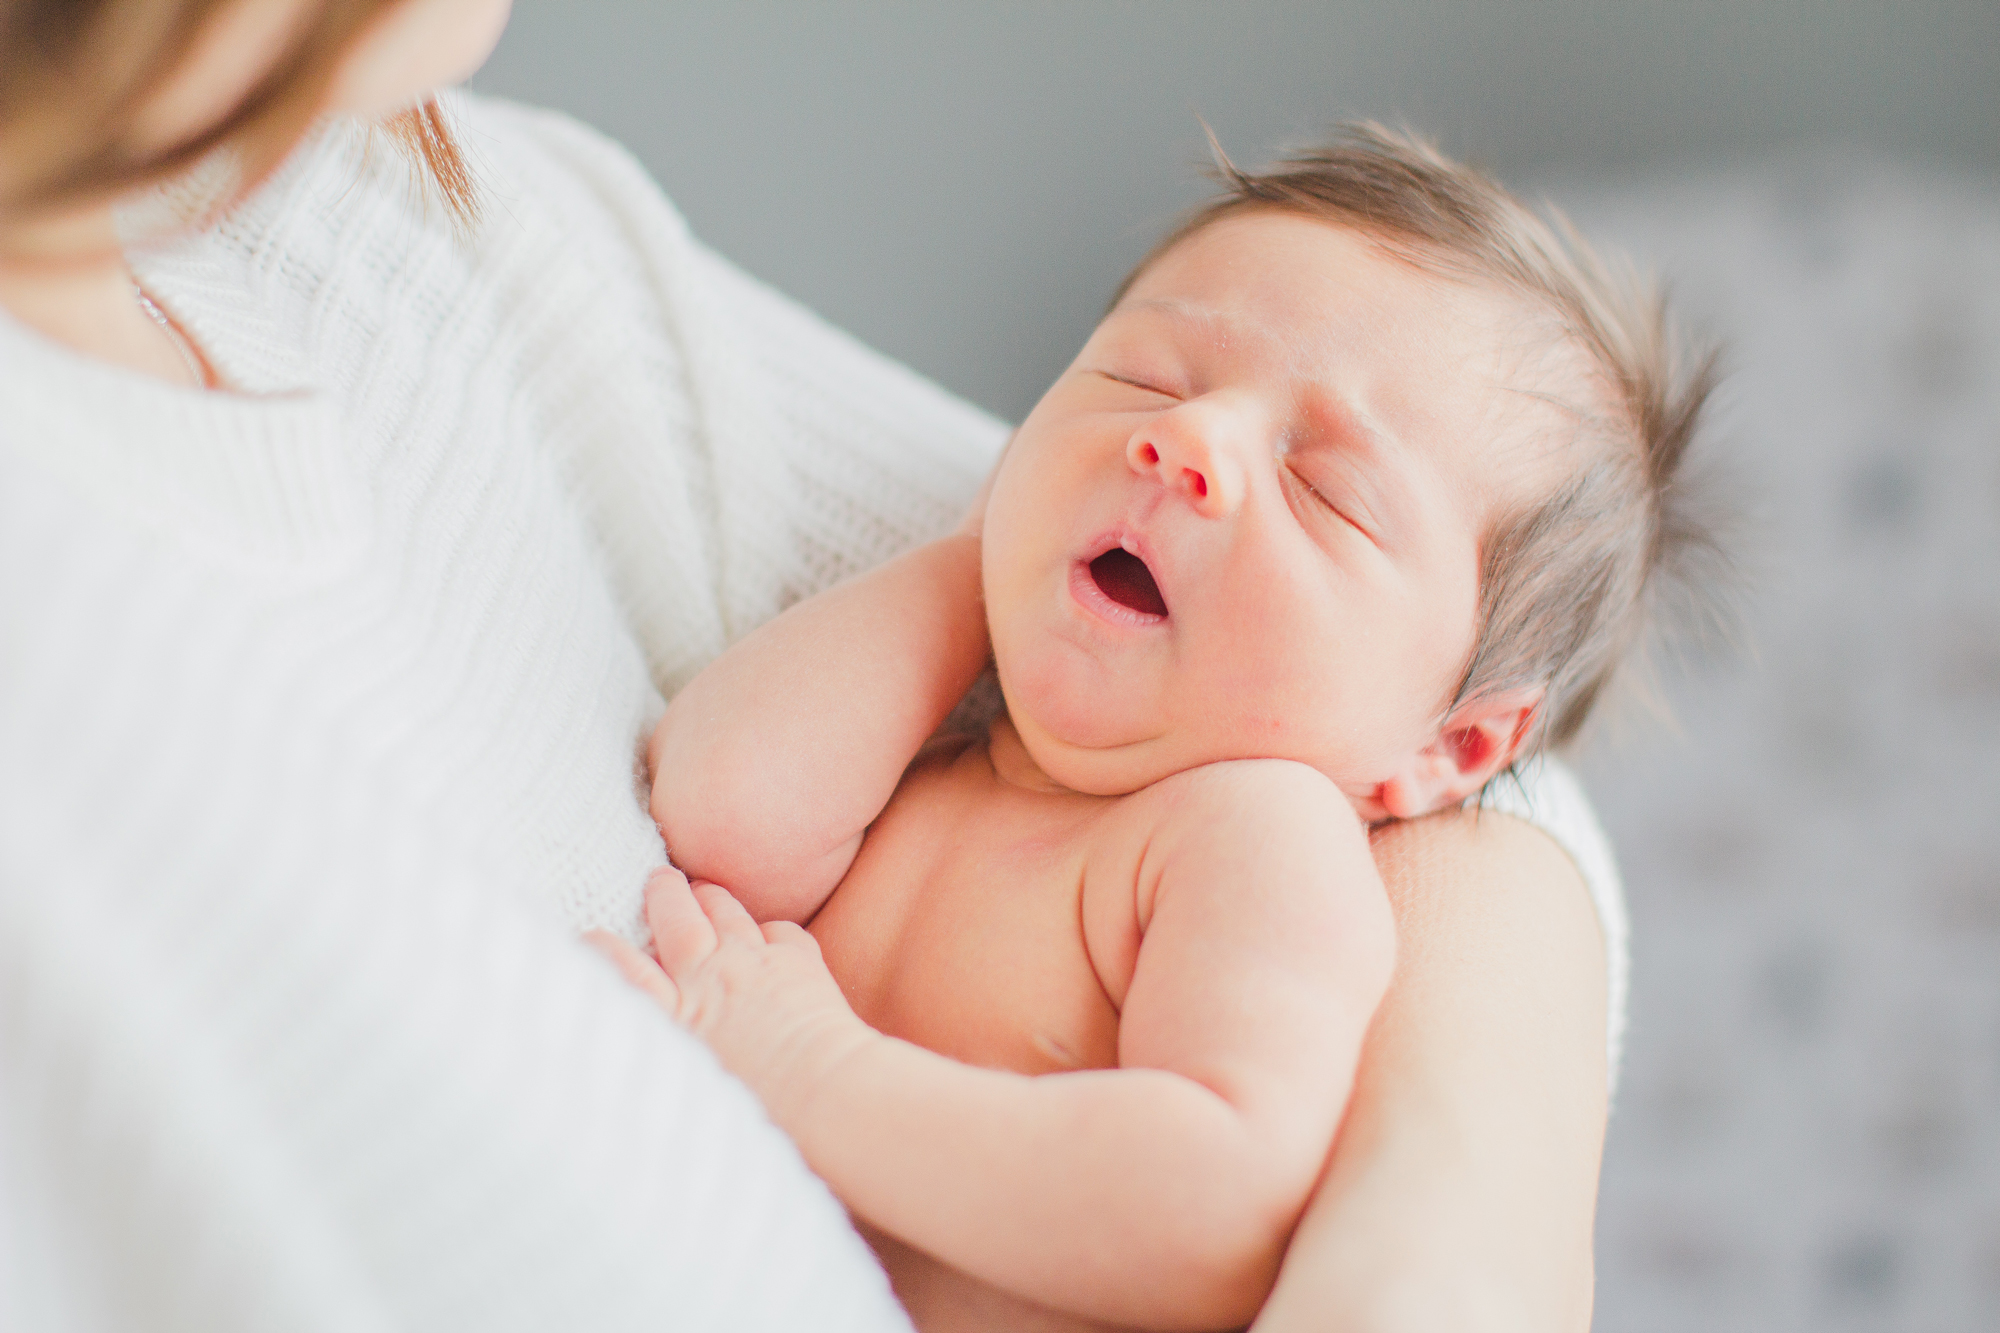 Ewing Newborn Session, Melissa Storey Photography, Mom holding newborn in her arms, newborn sleeping peacefully